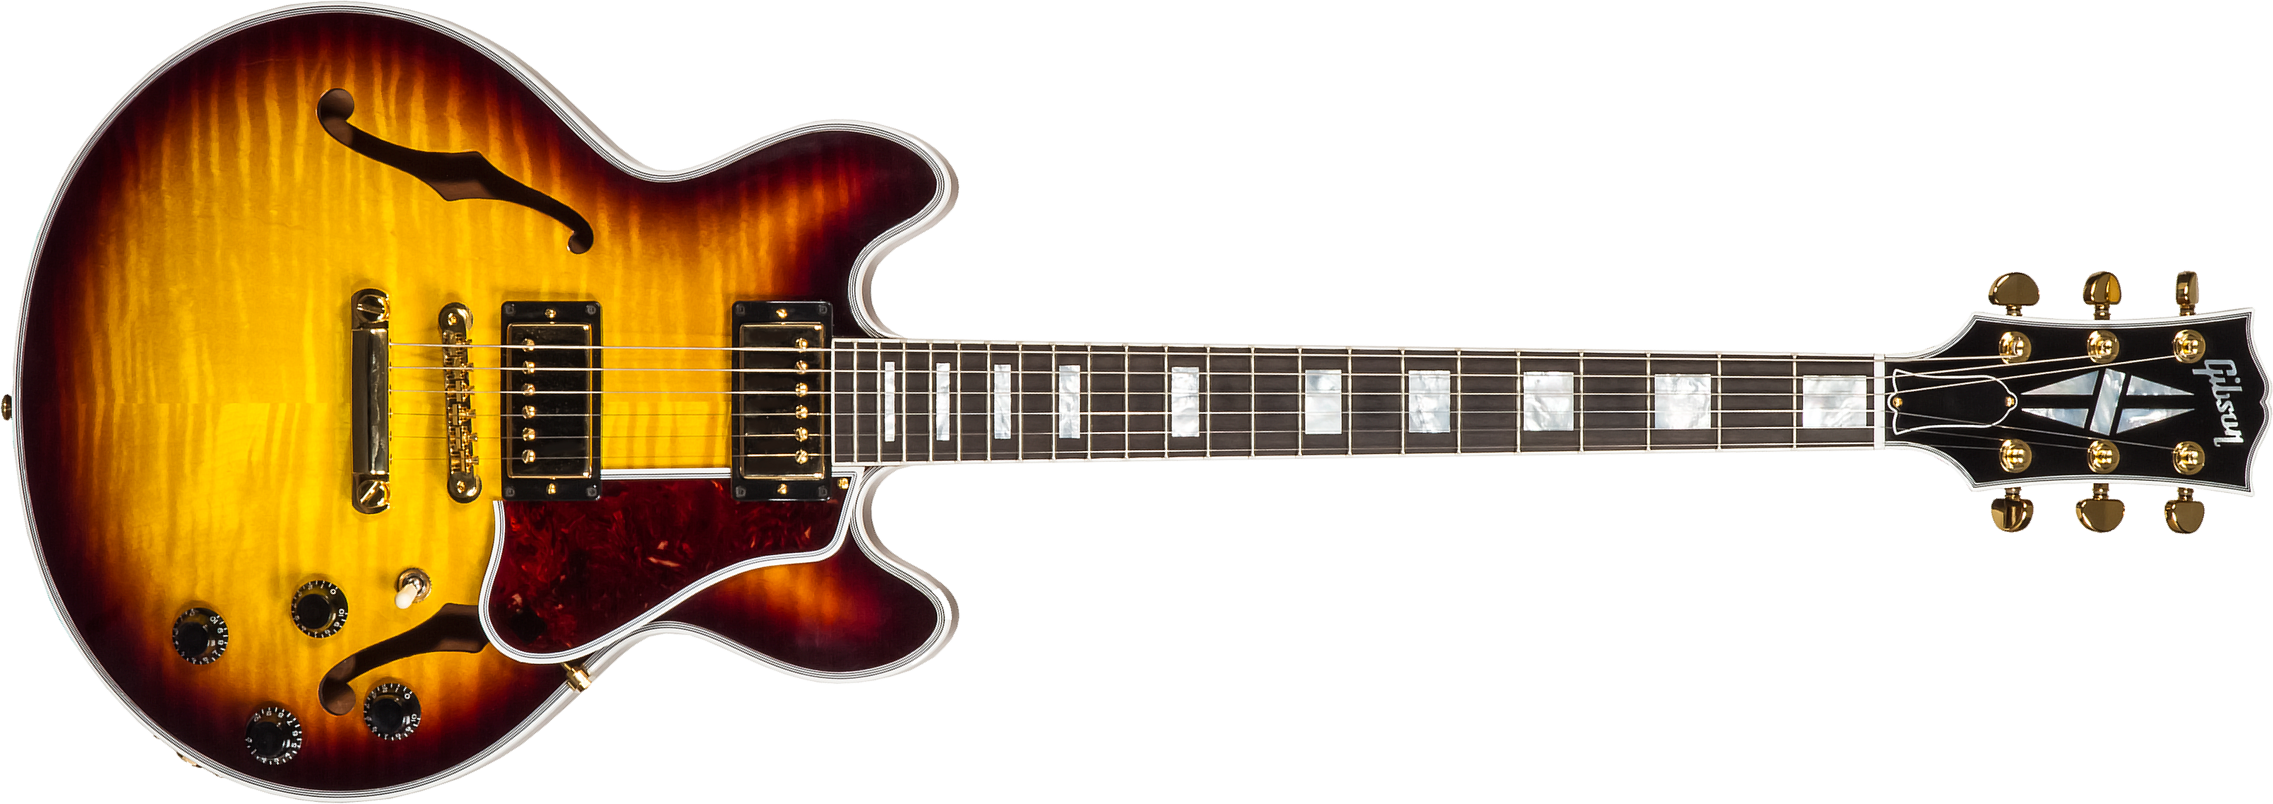 Gibson Custom Shop Cs-356 2h Ht Eb #cs201786 - Vintage Sunburst - Semi-hollow electric guitar - Main picture